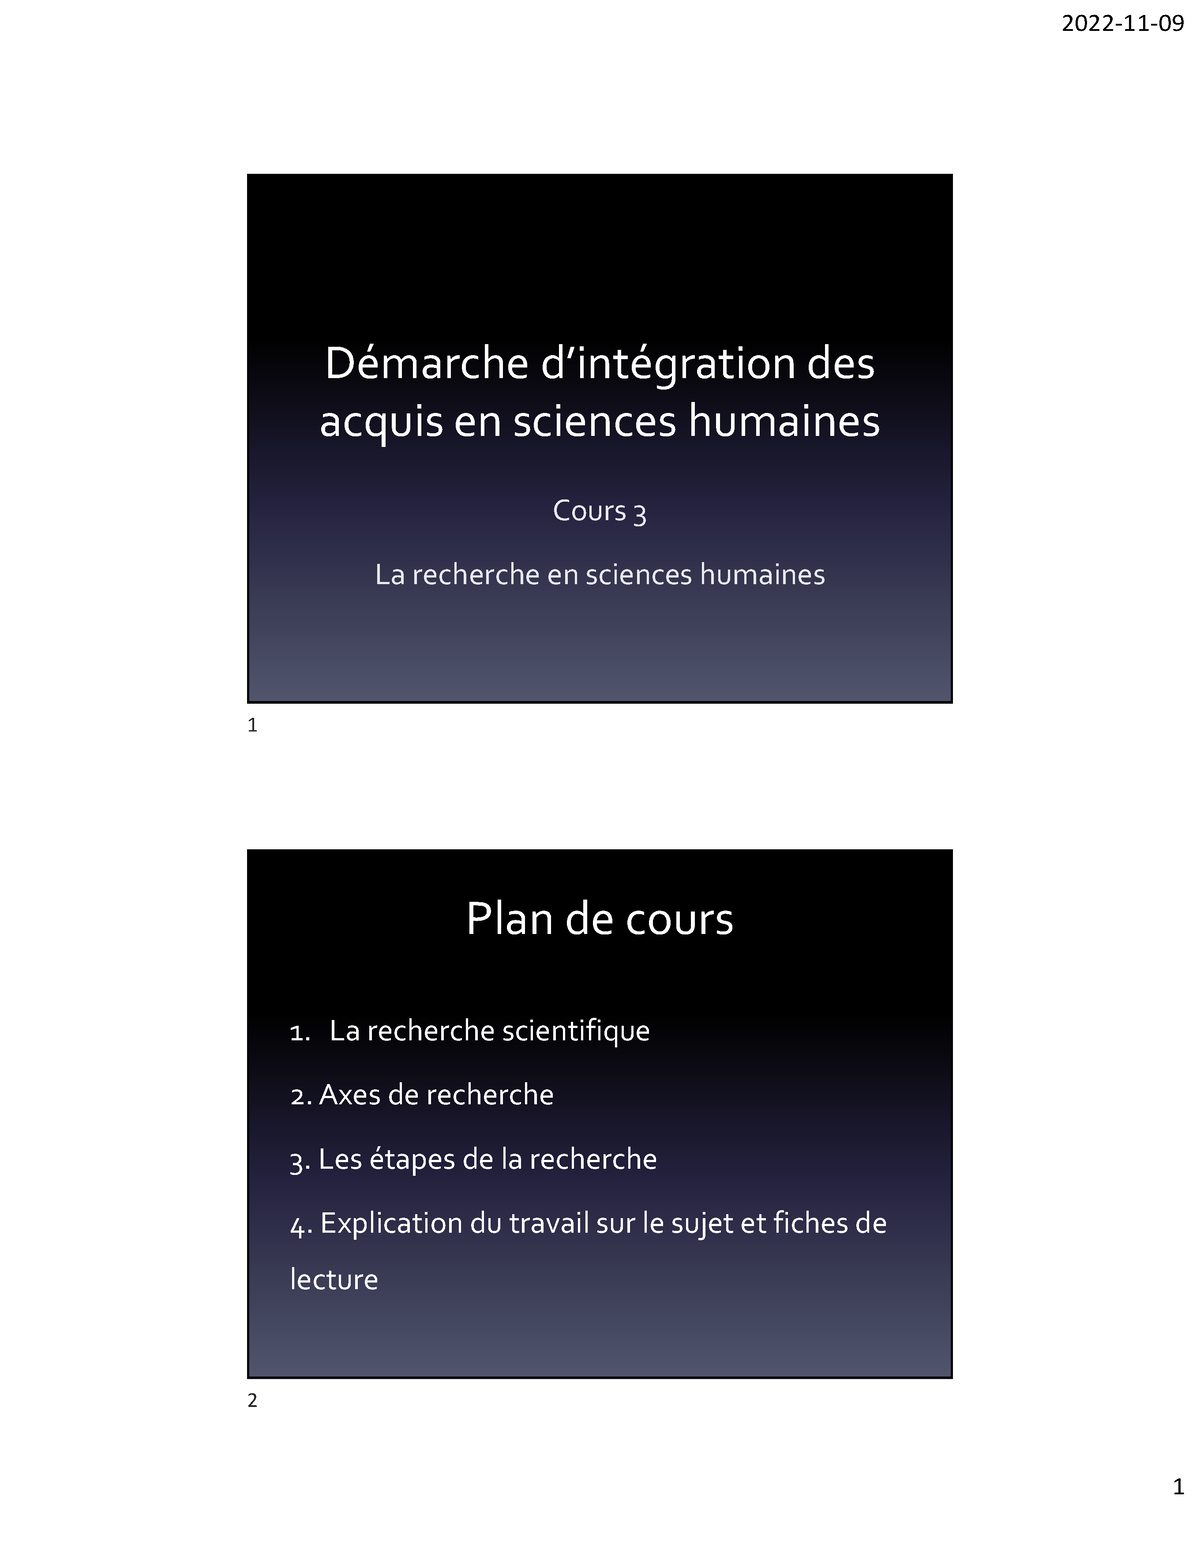 science humaine dissertation